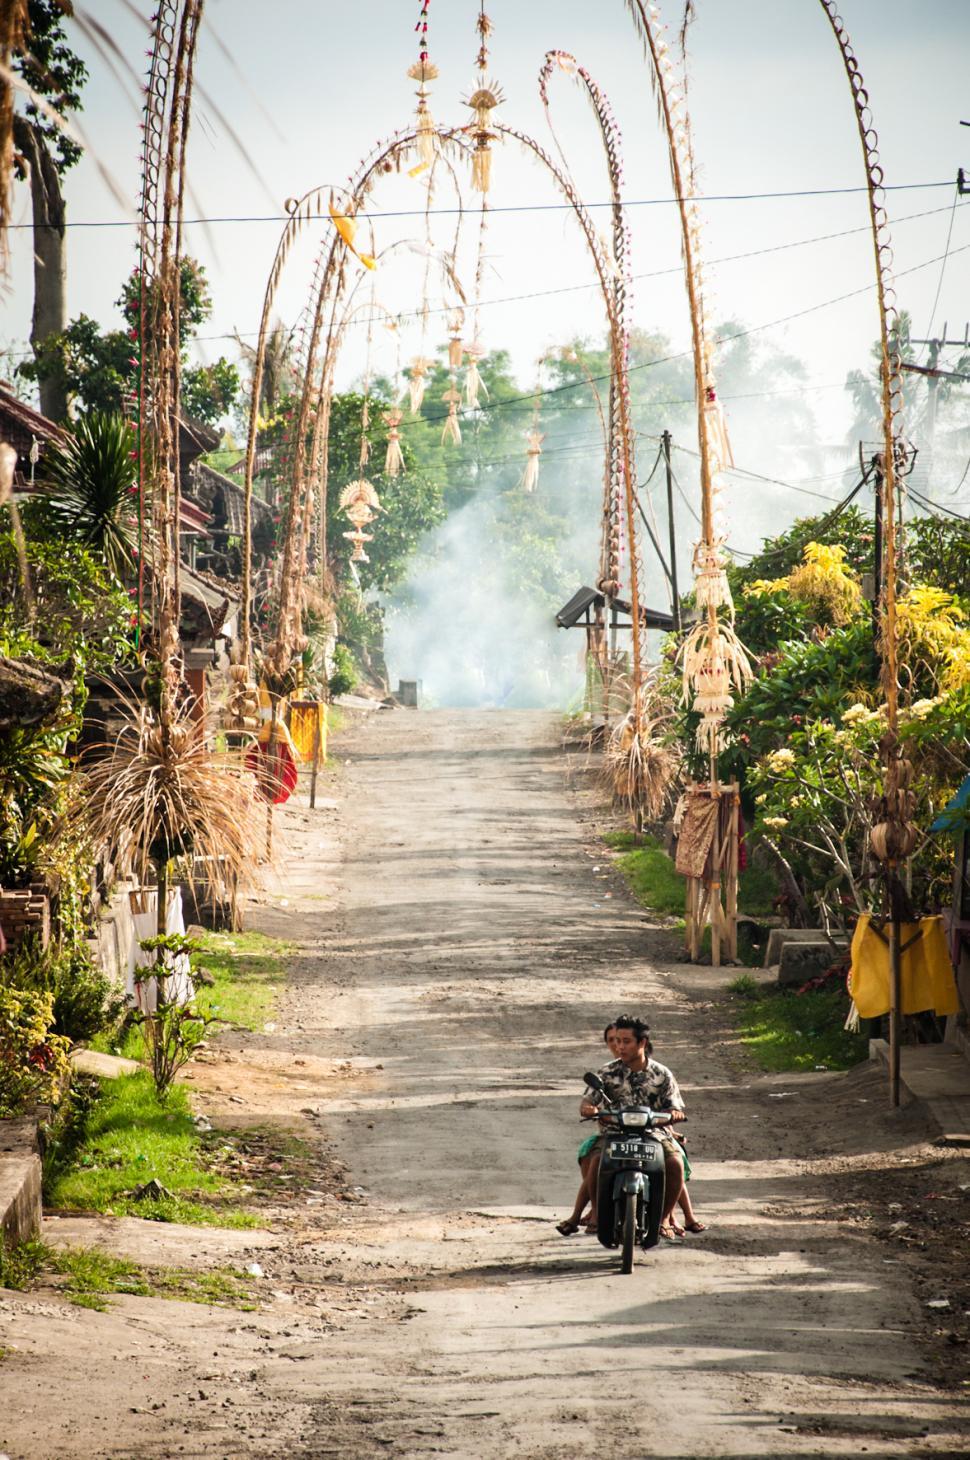 Download Free Stock Photo of Balinese village street 